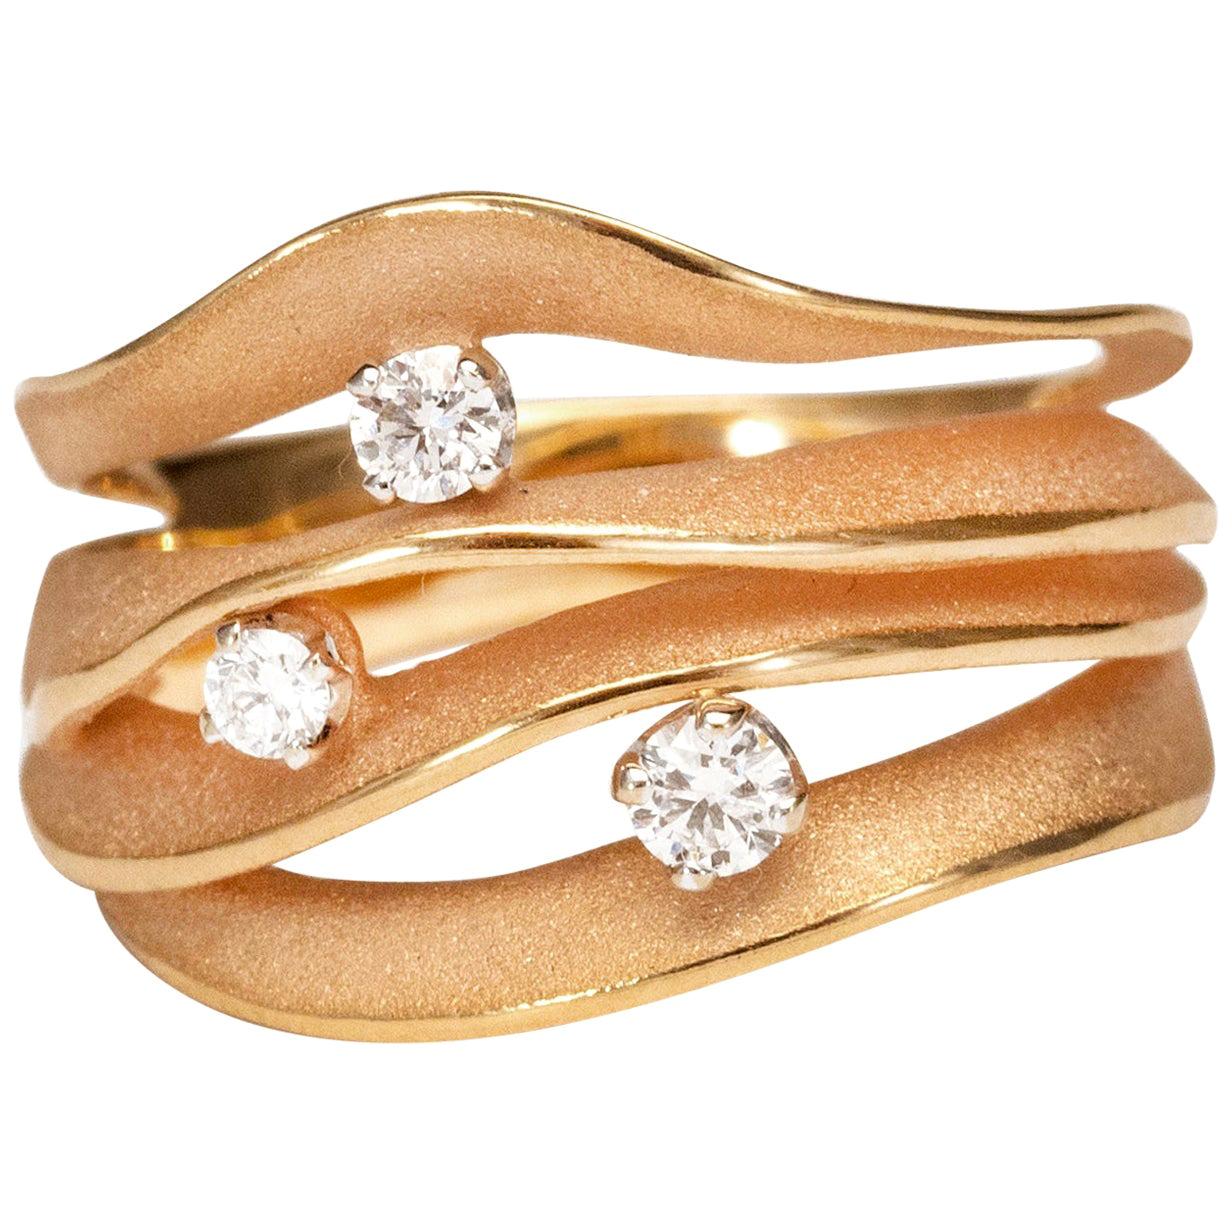 Annamaria Cammilli "Dune Royal" Ring with Diamonds in 18 Karat Champagne Gold